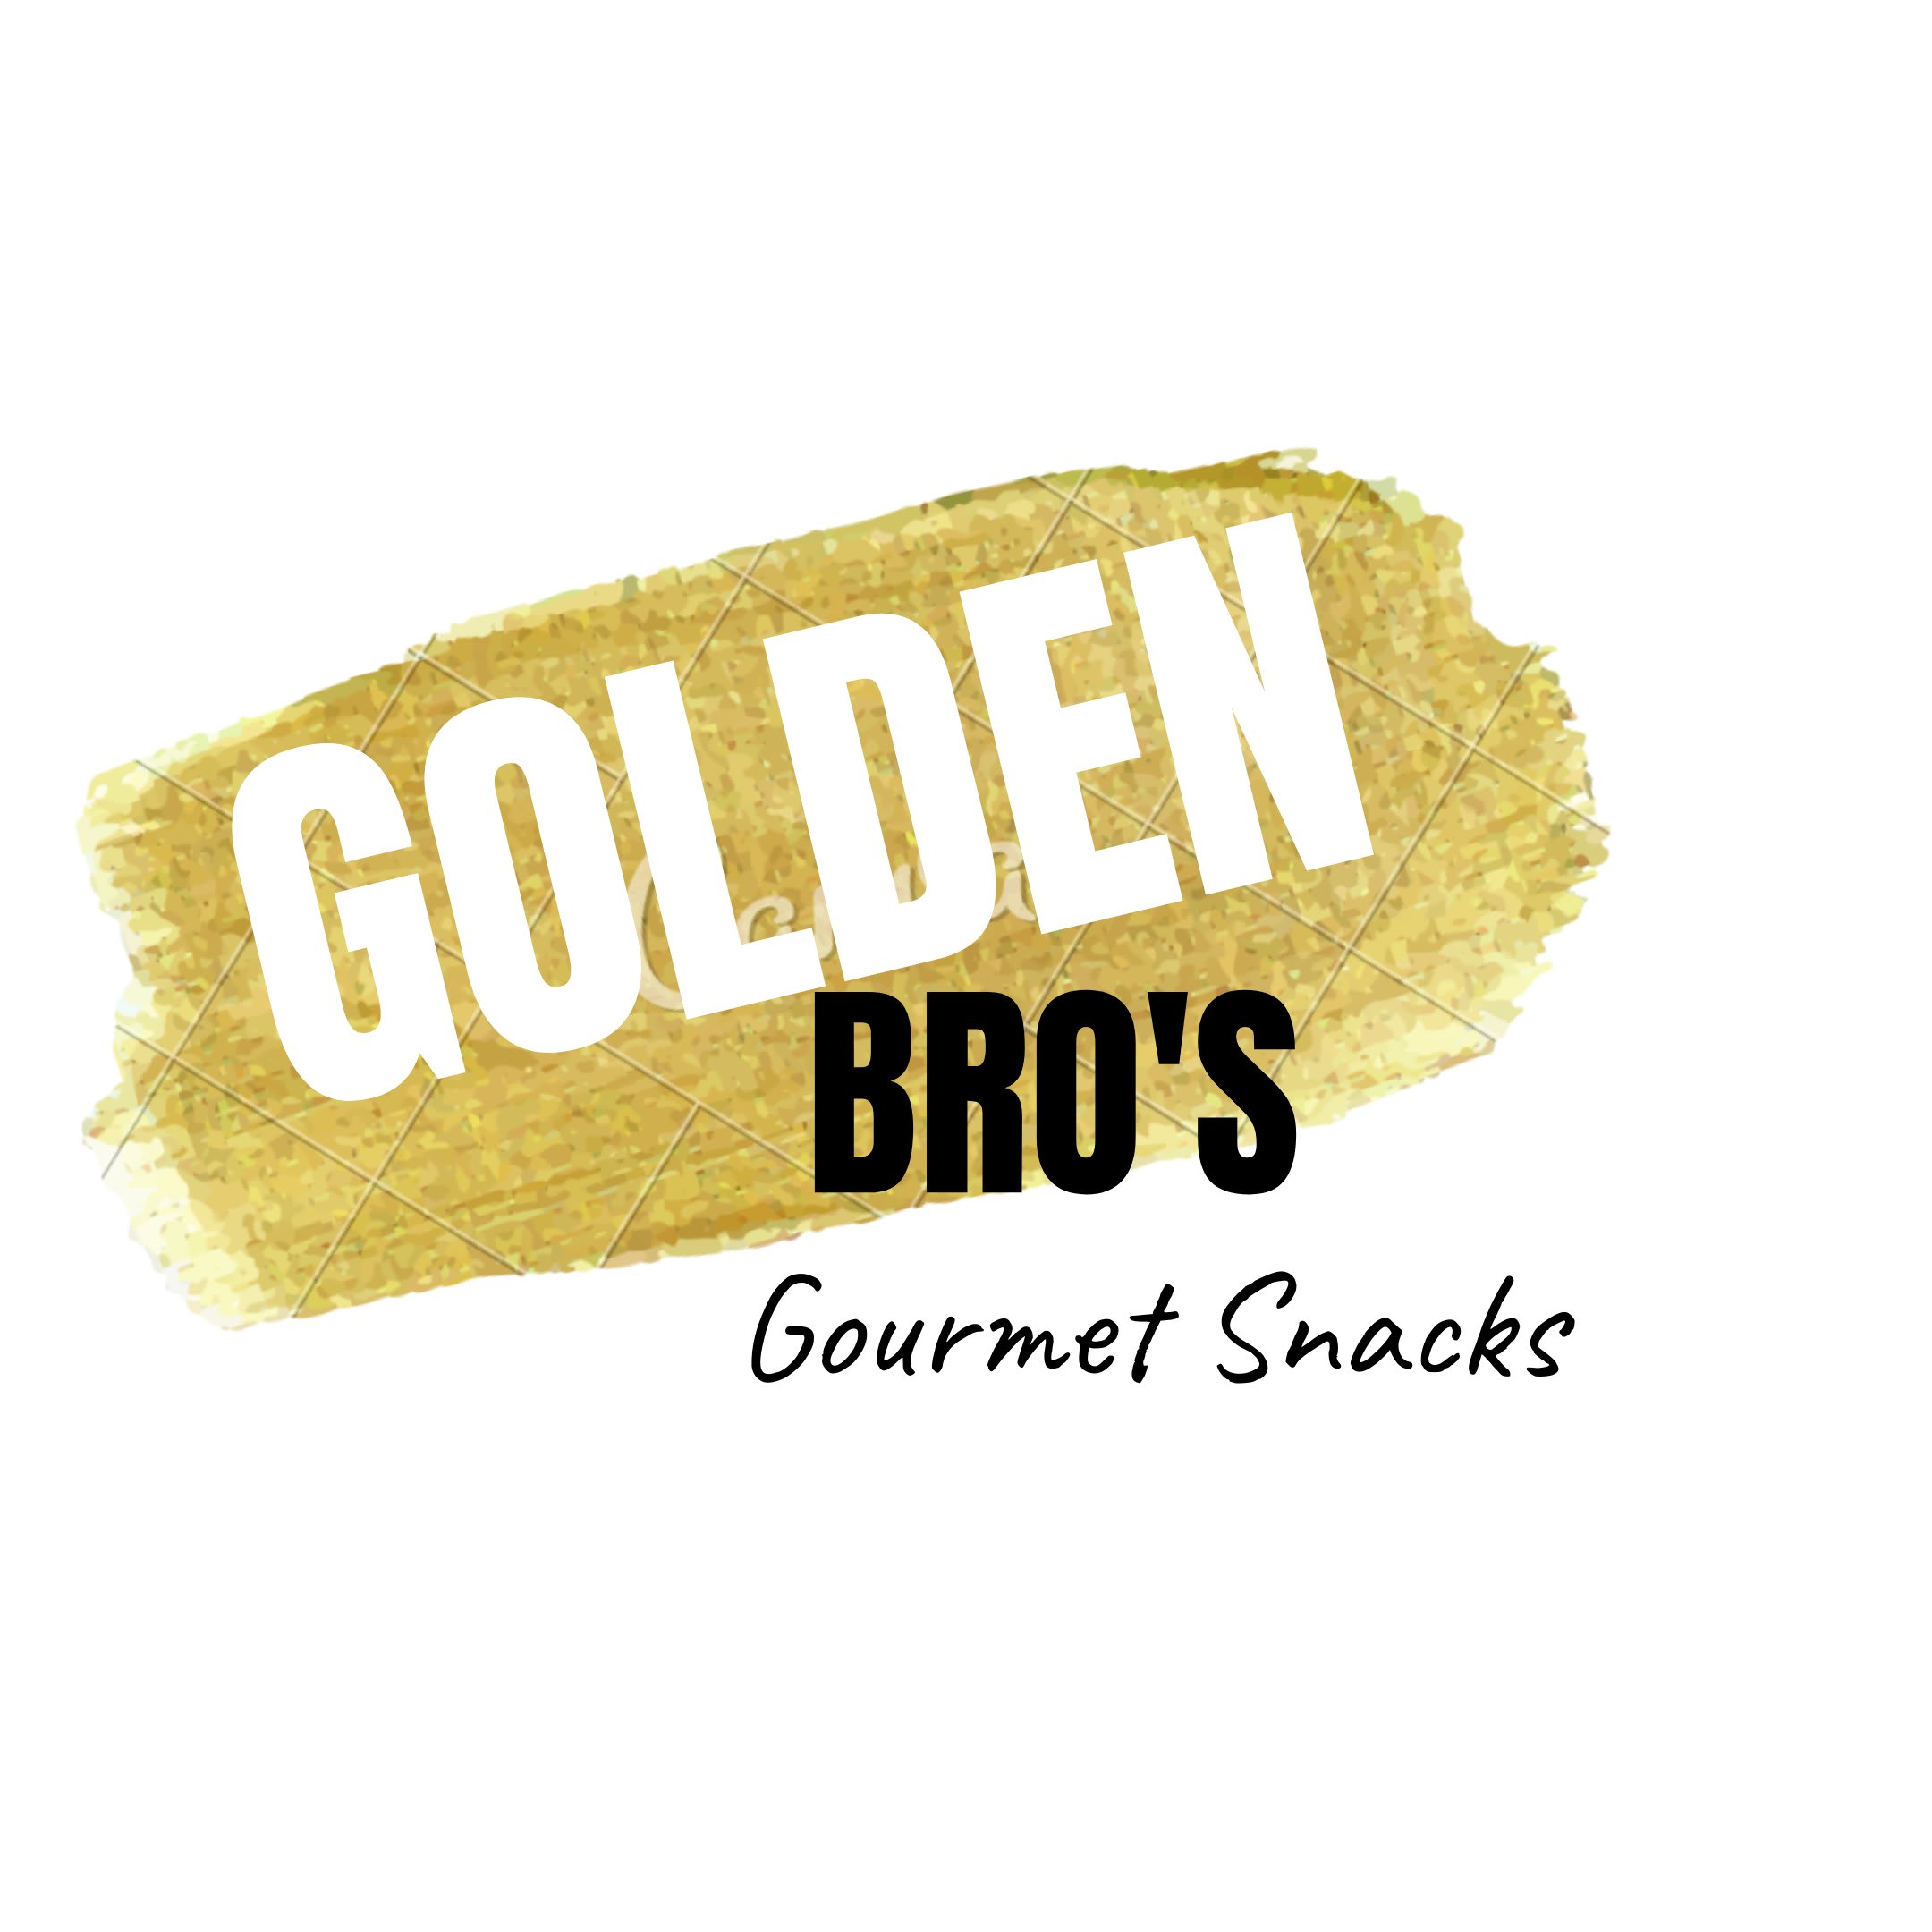 The Golden Bros